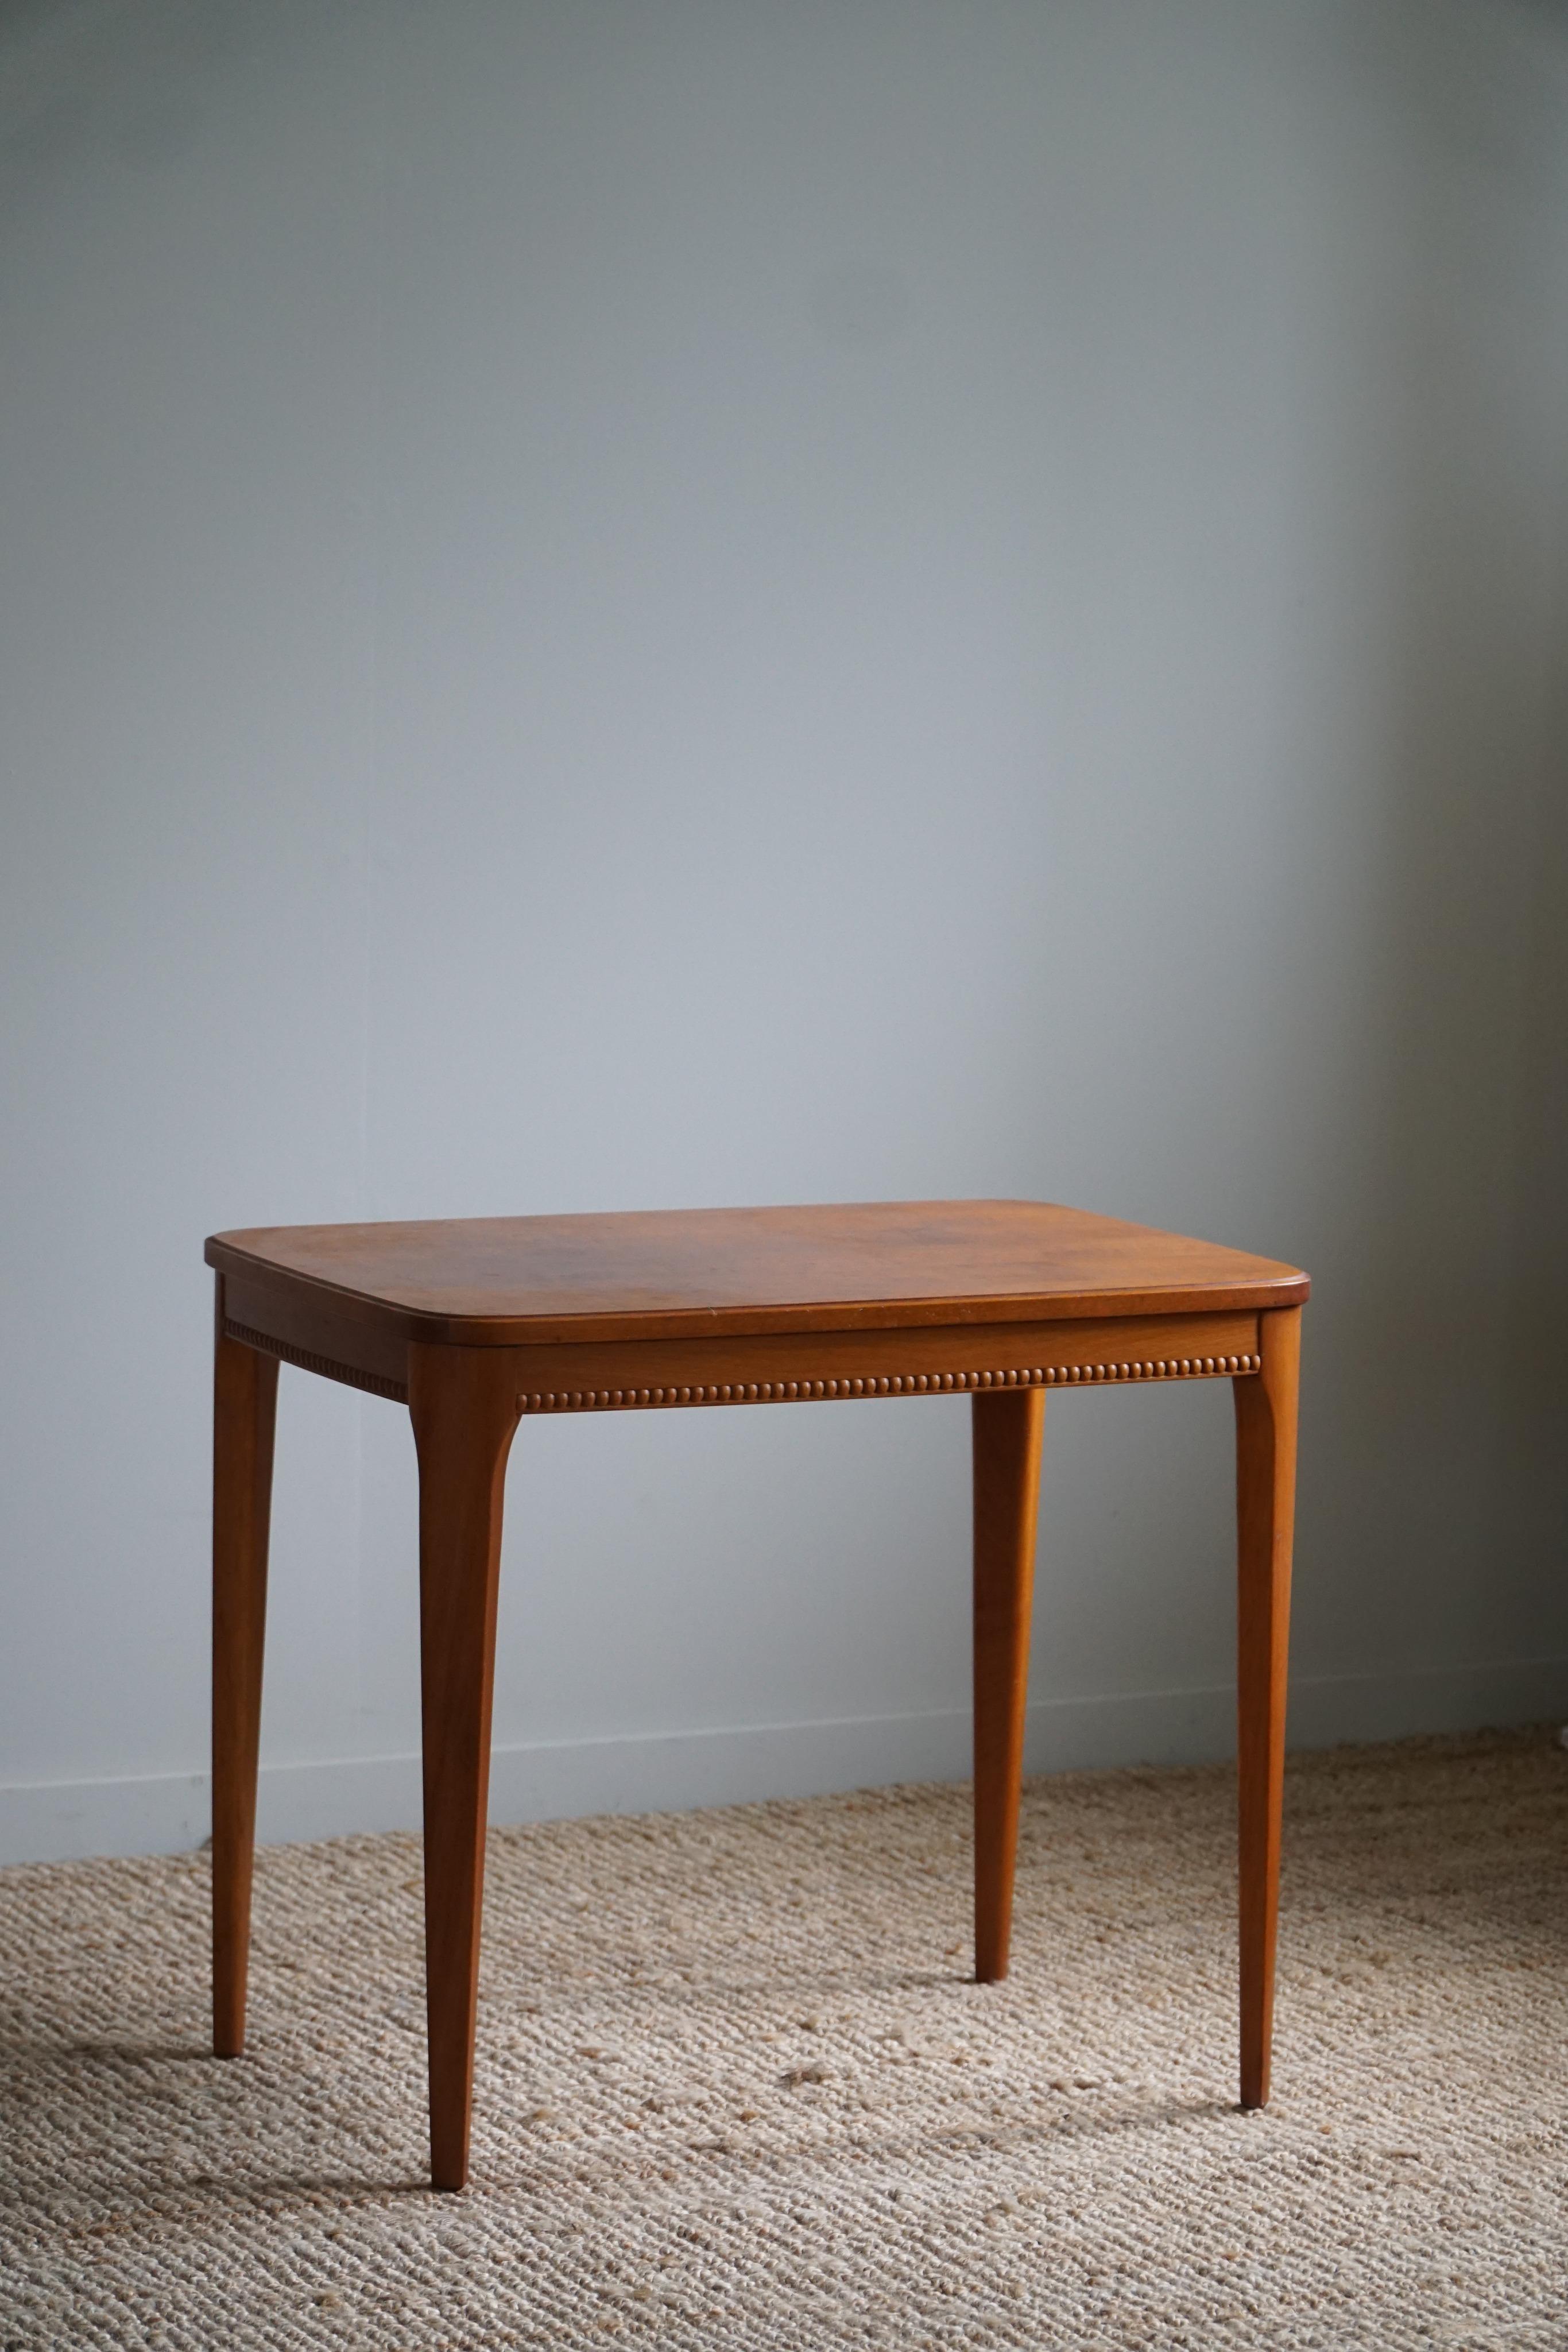 Side Table in Teak, Danish Mid Century Modern, 1950s  For Sale 5